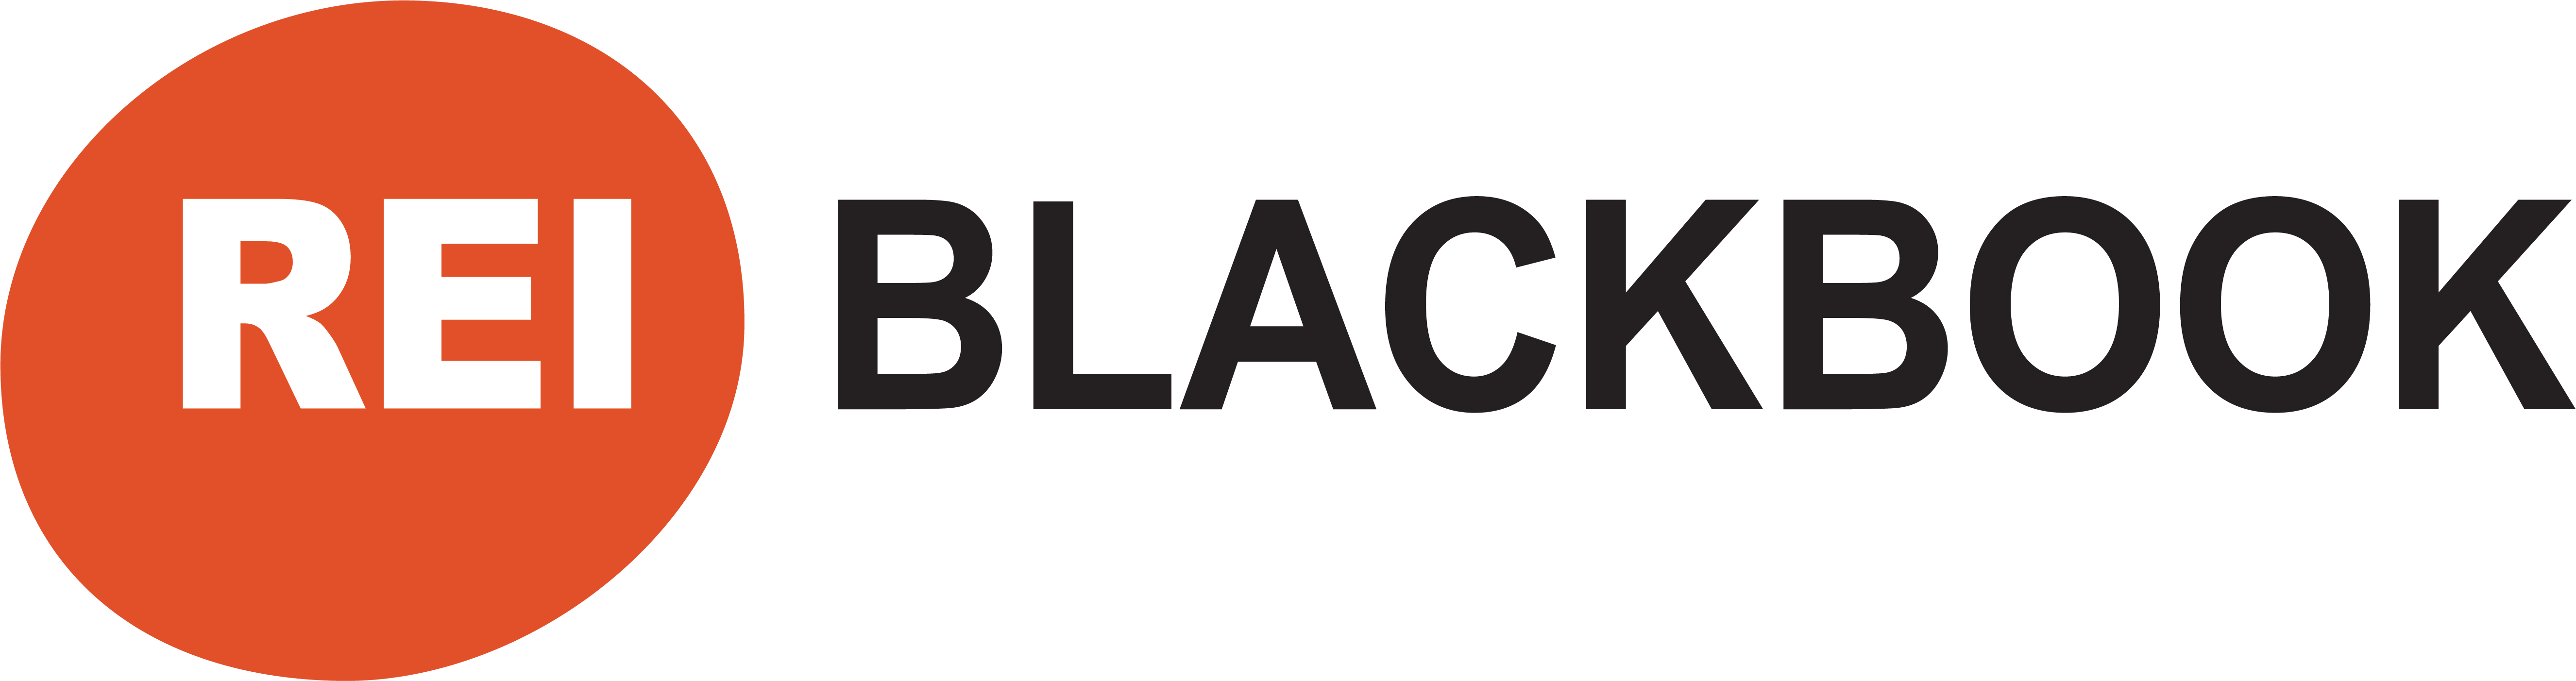 REI Blackbook -Trusted Client by OneStop DevShop